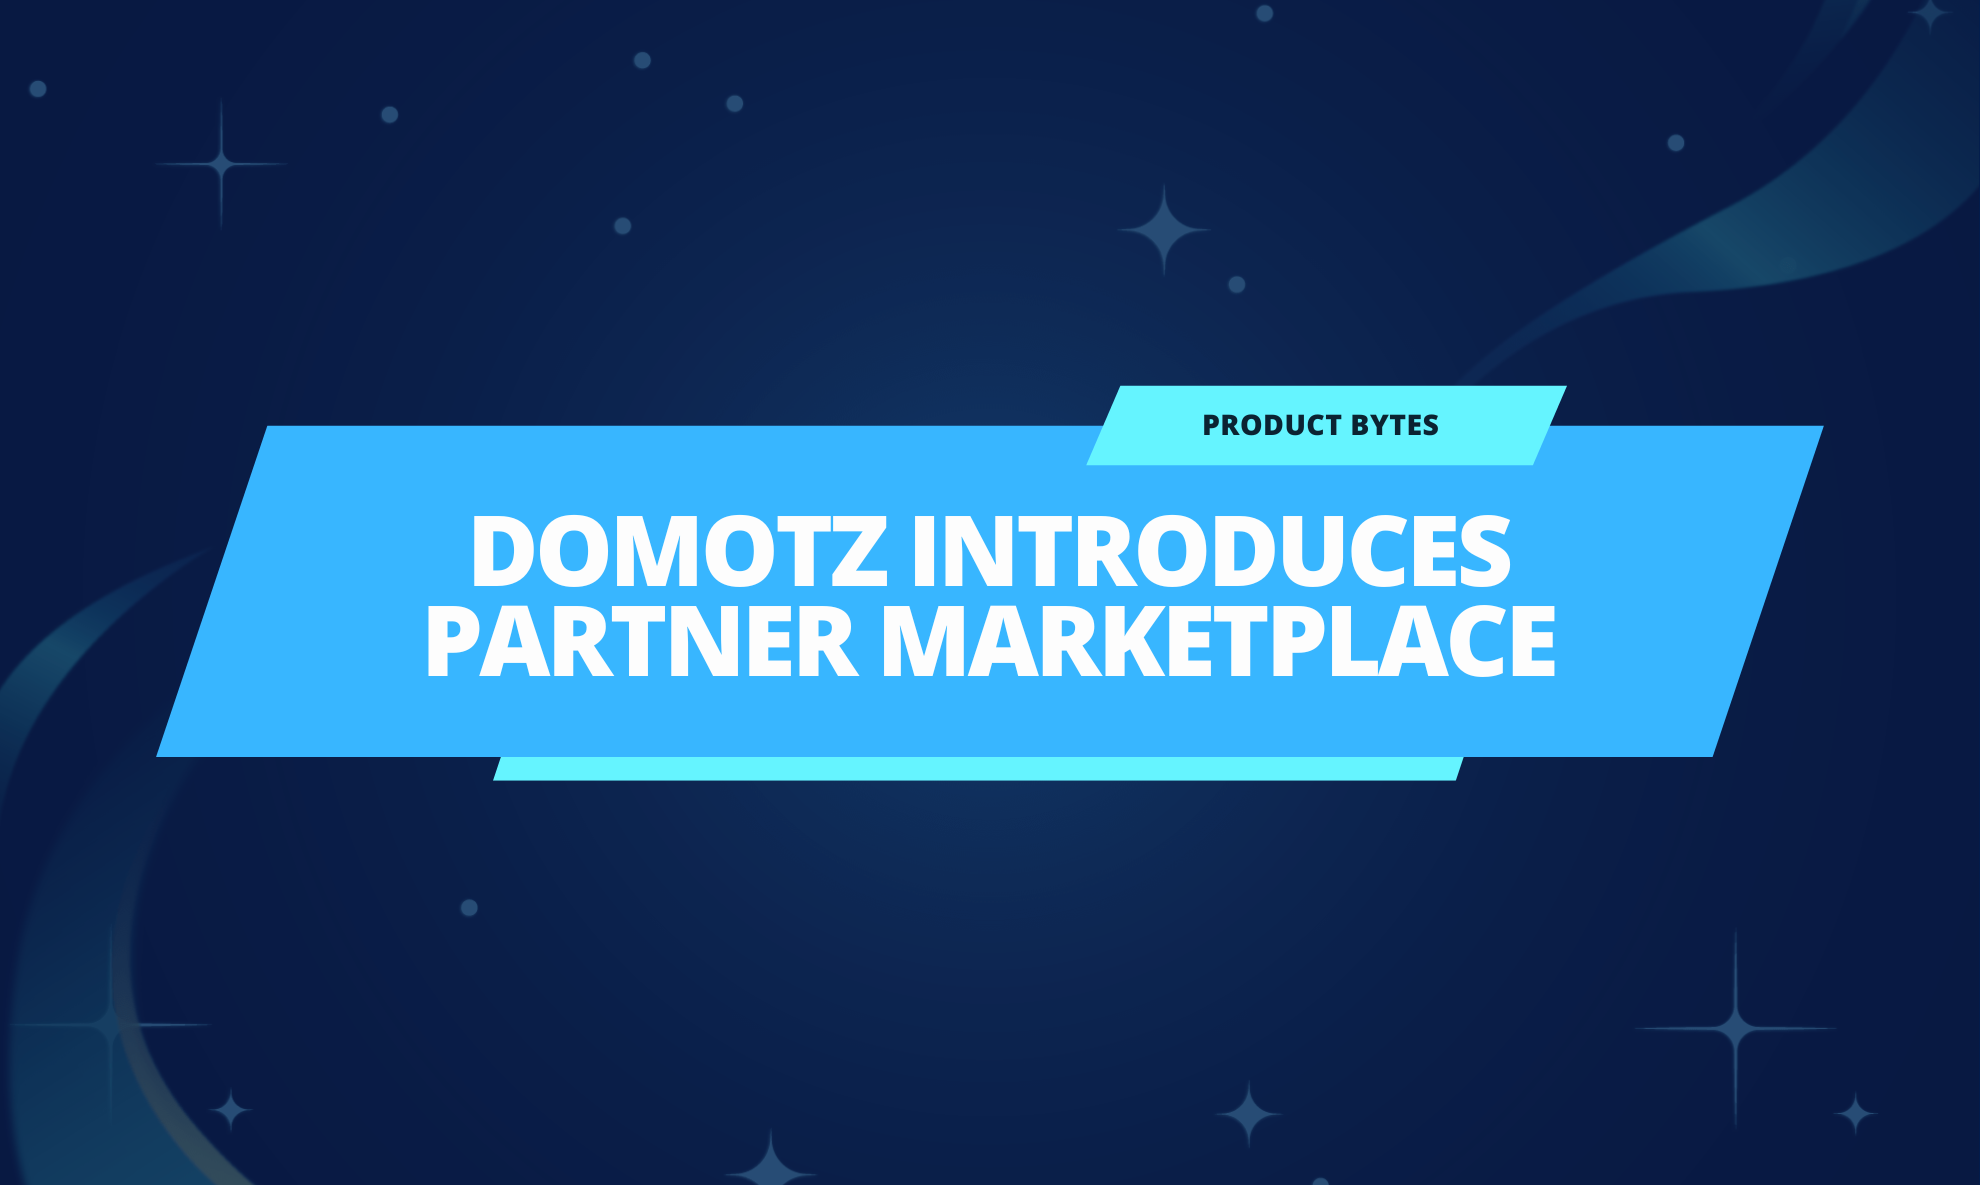 Domotz Introduces Partner Marketplace